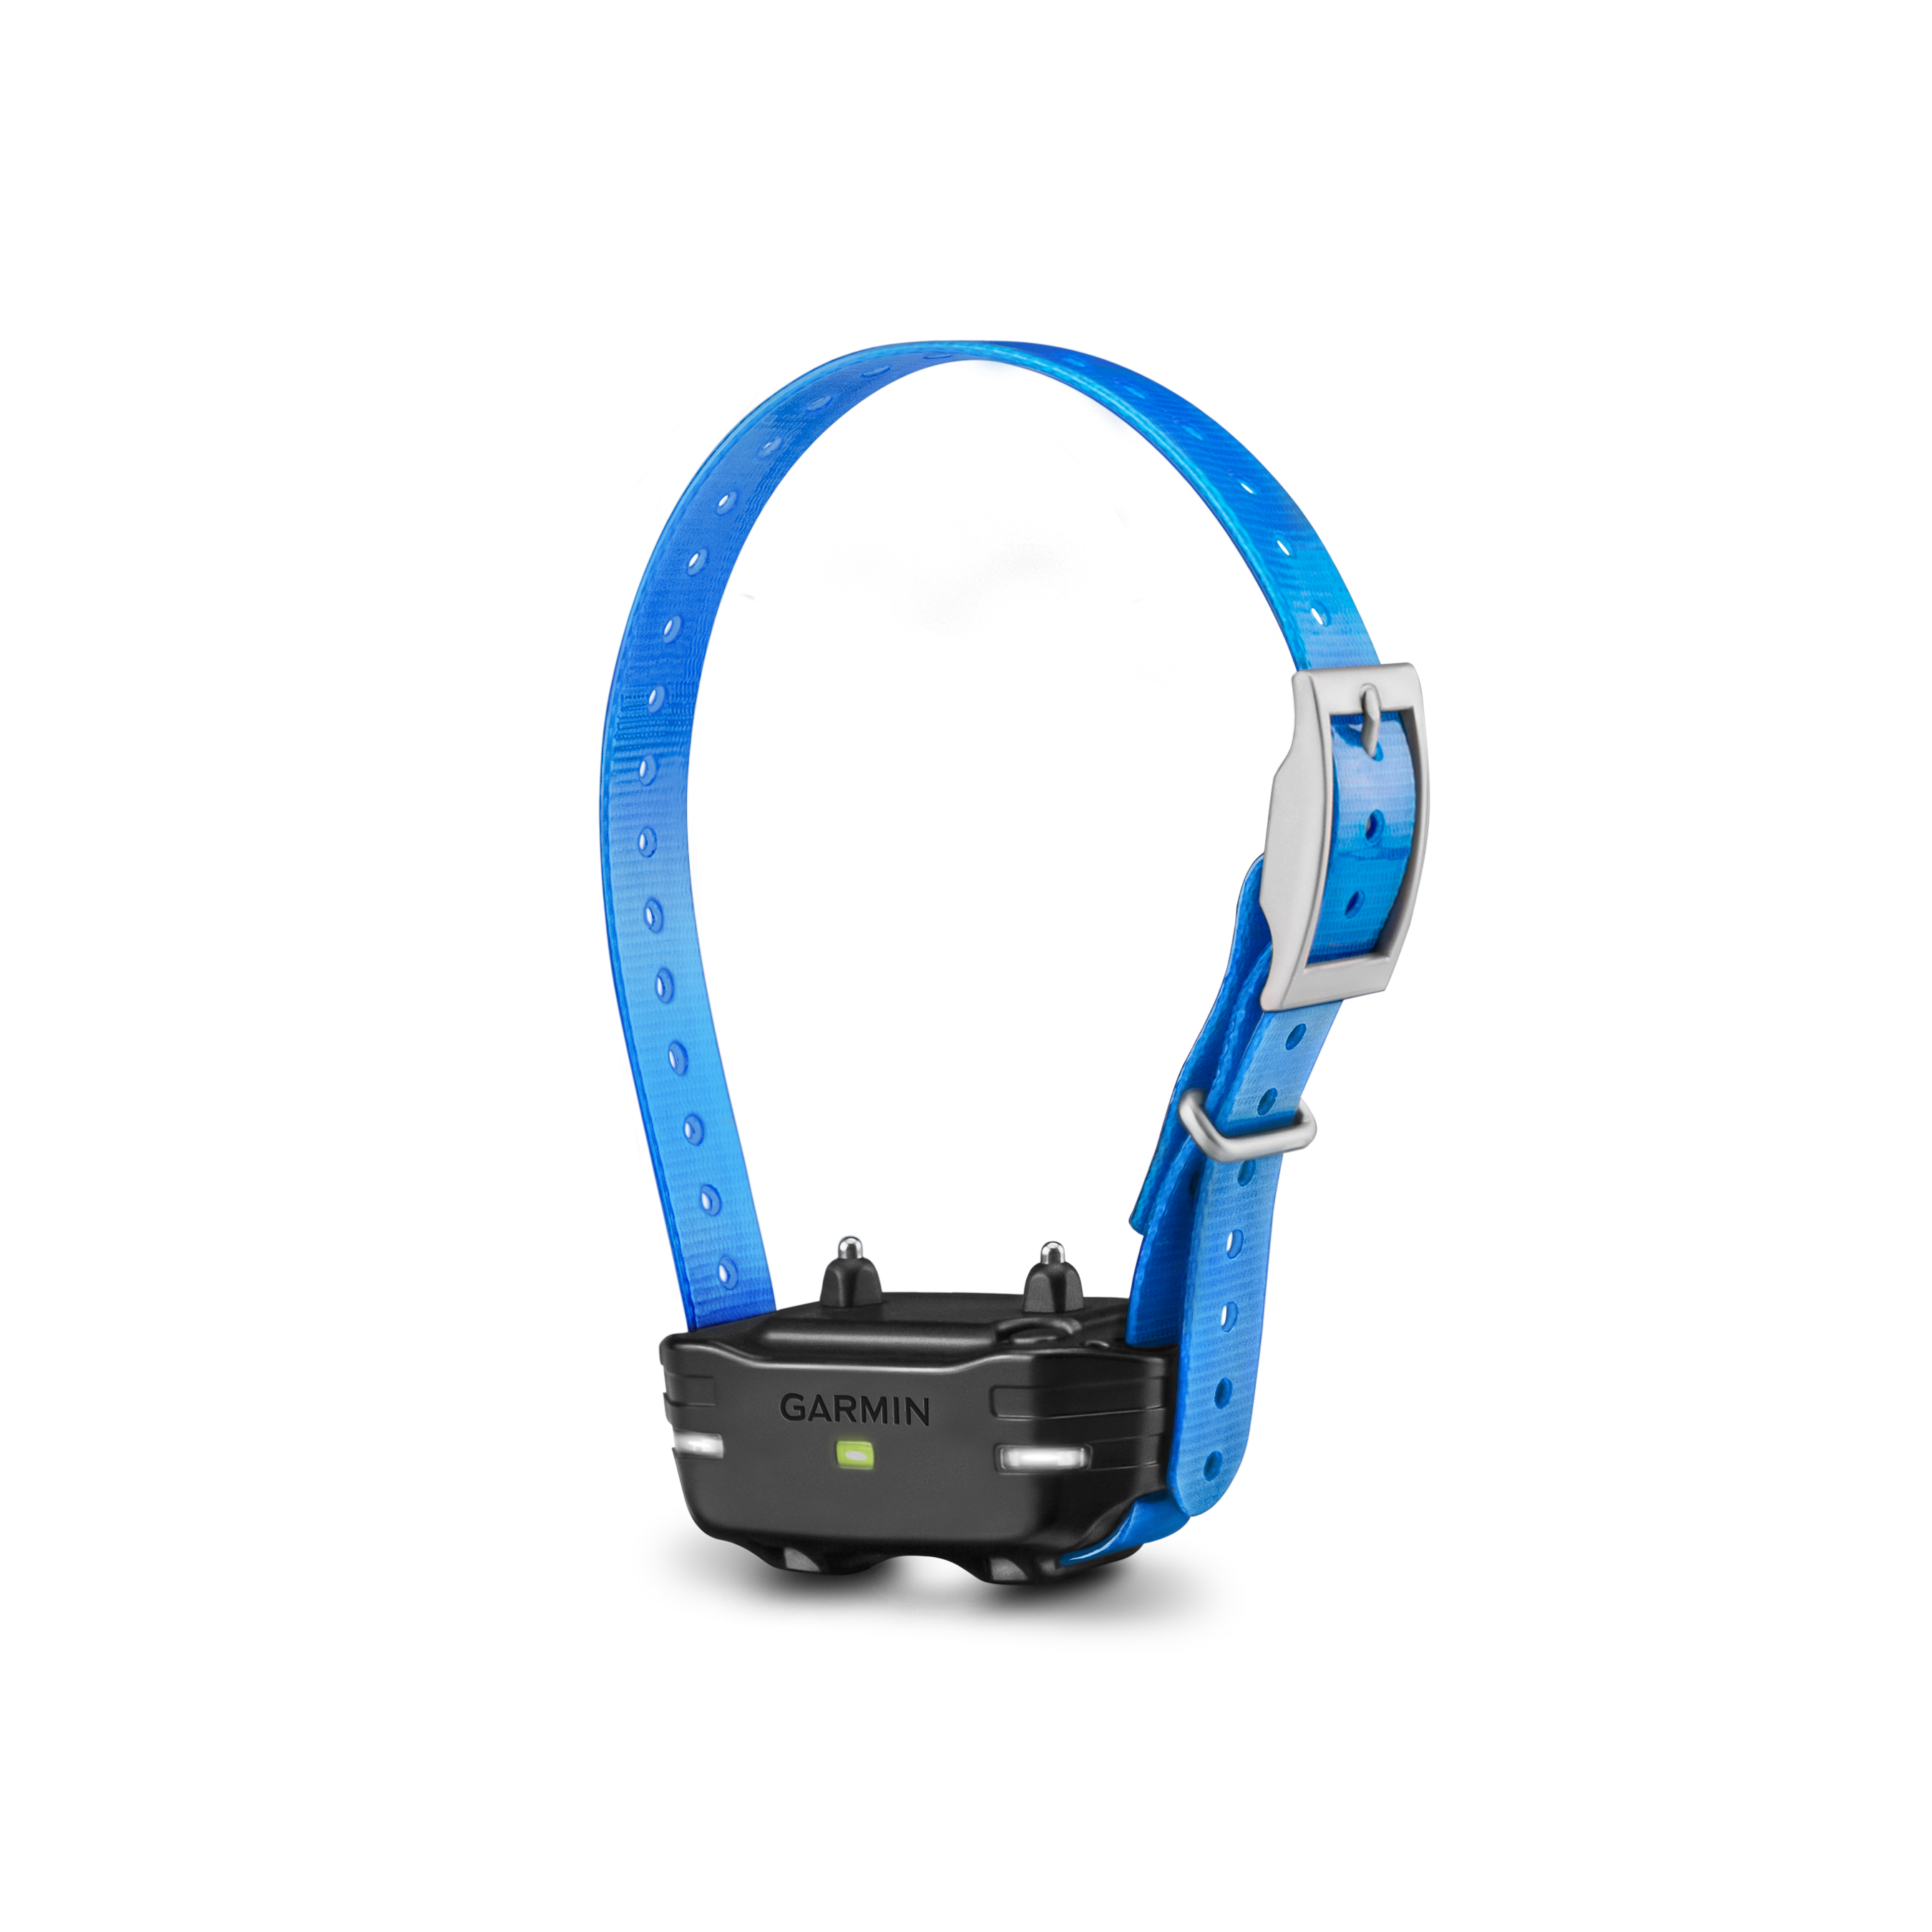 Garmin PT 10 Dog Device with Blue Collar